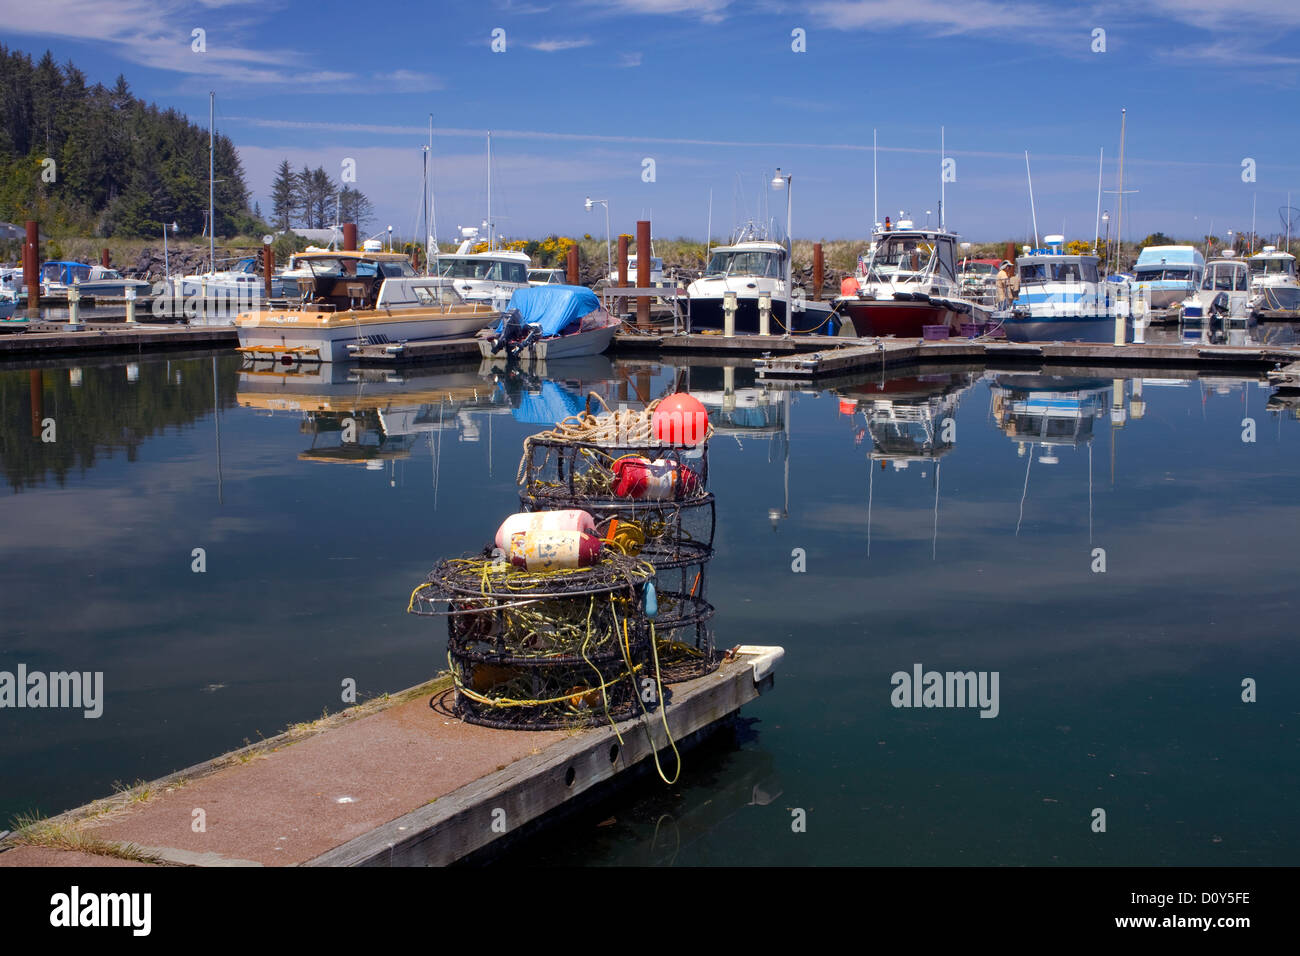 Crab fishing oregon coast hi-res stock photography and images - Alamy